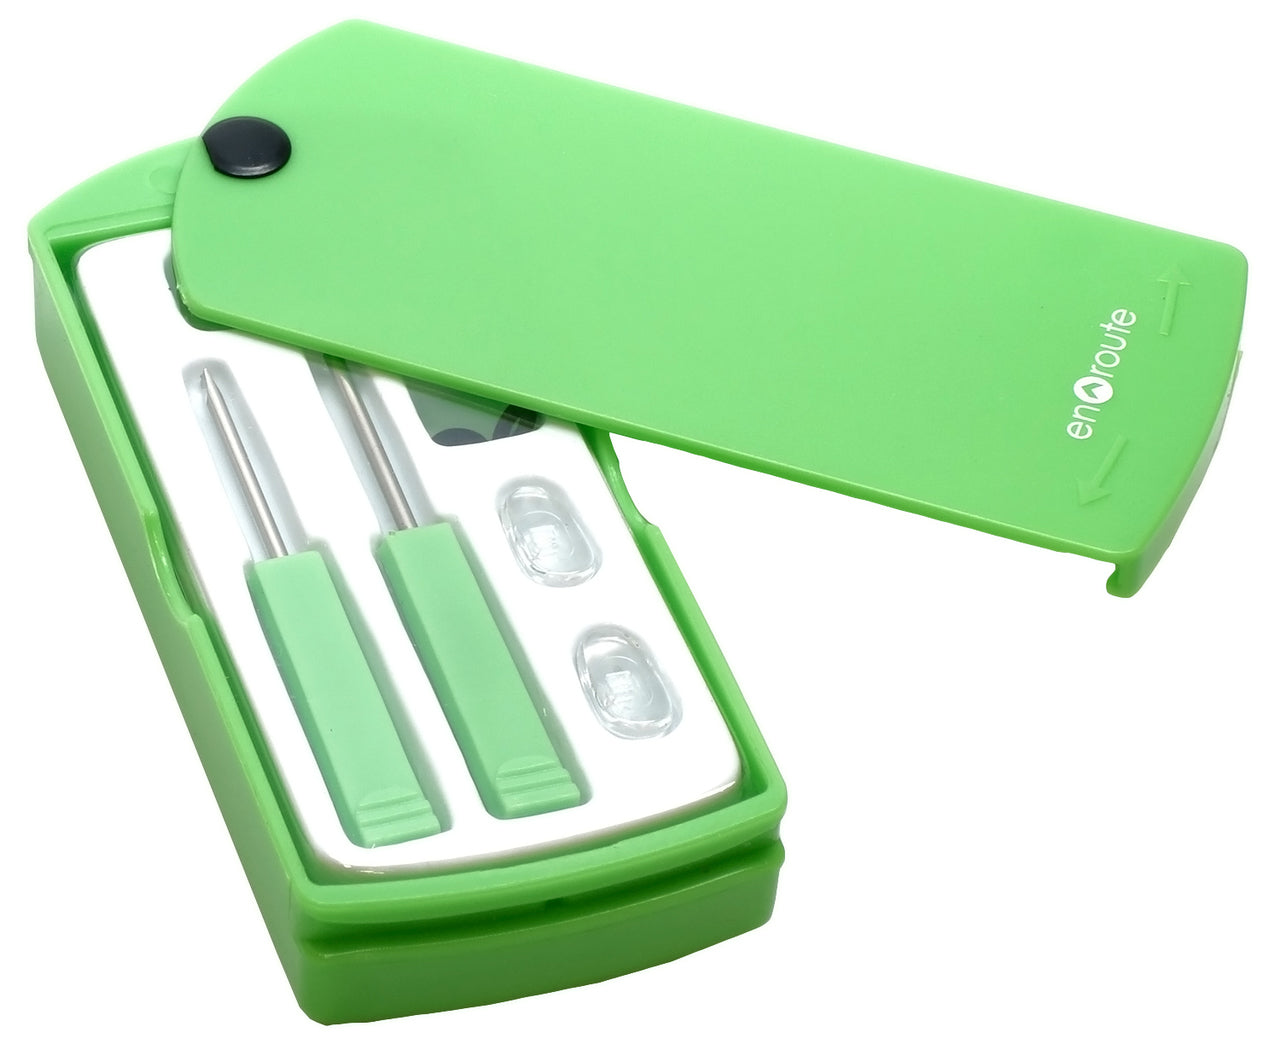 green handy eyeglass repair kit open on a white background